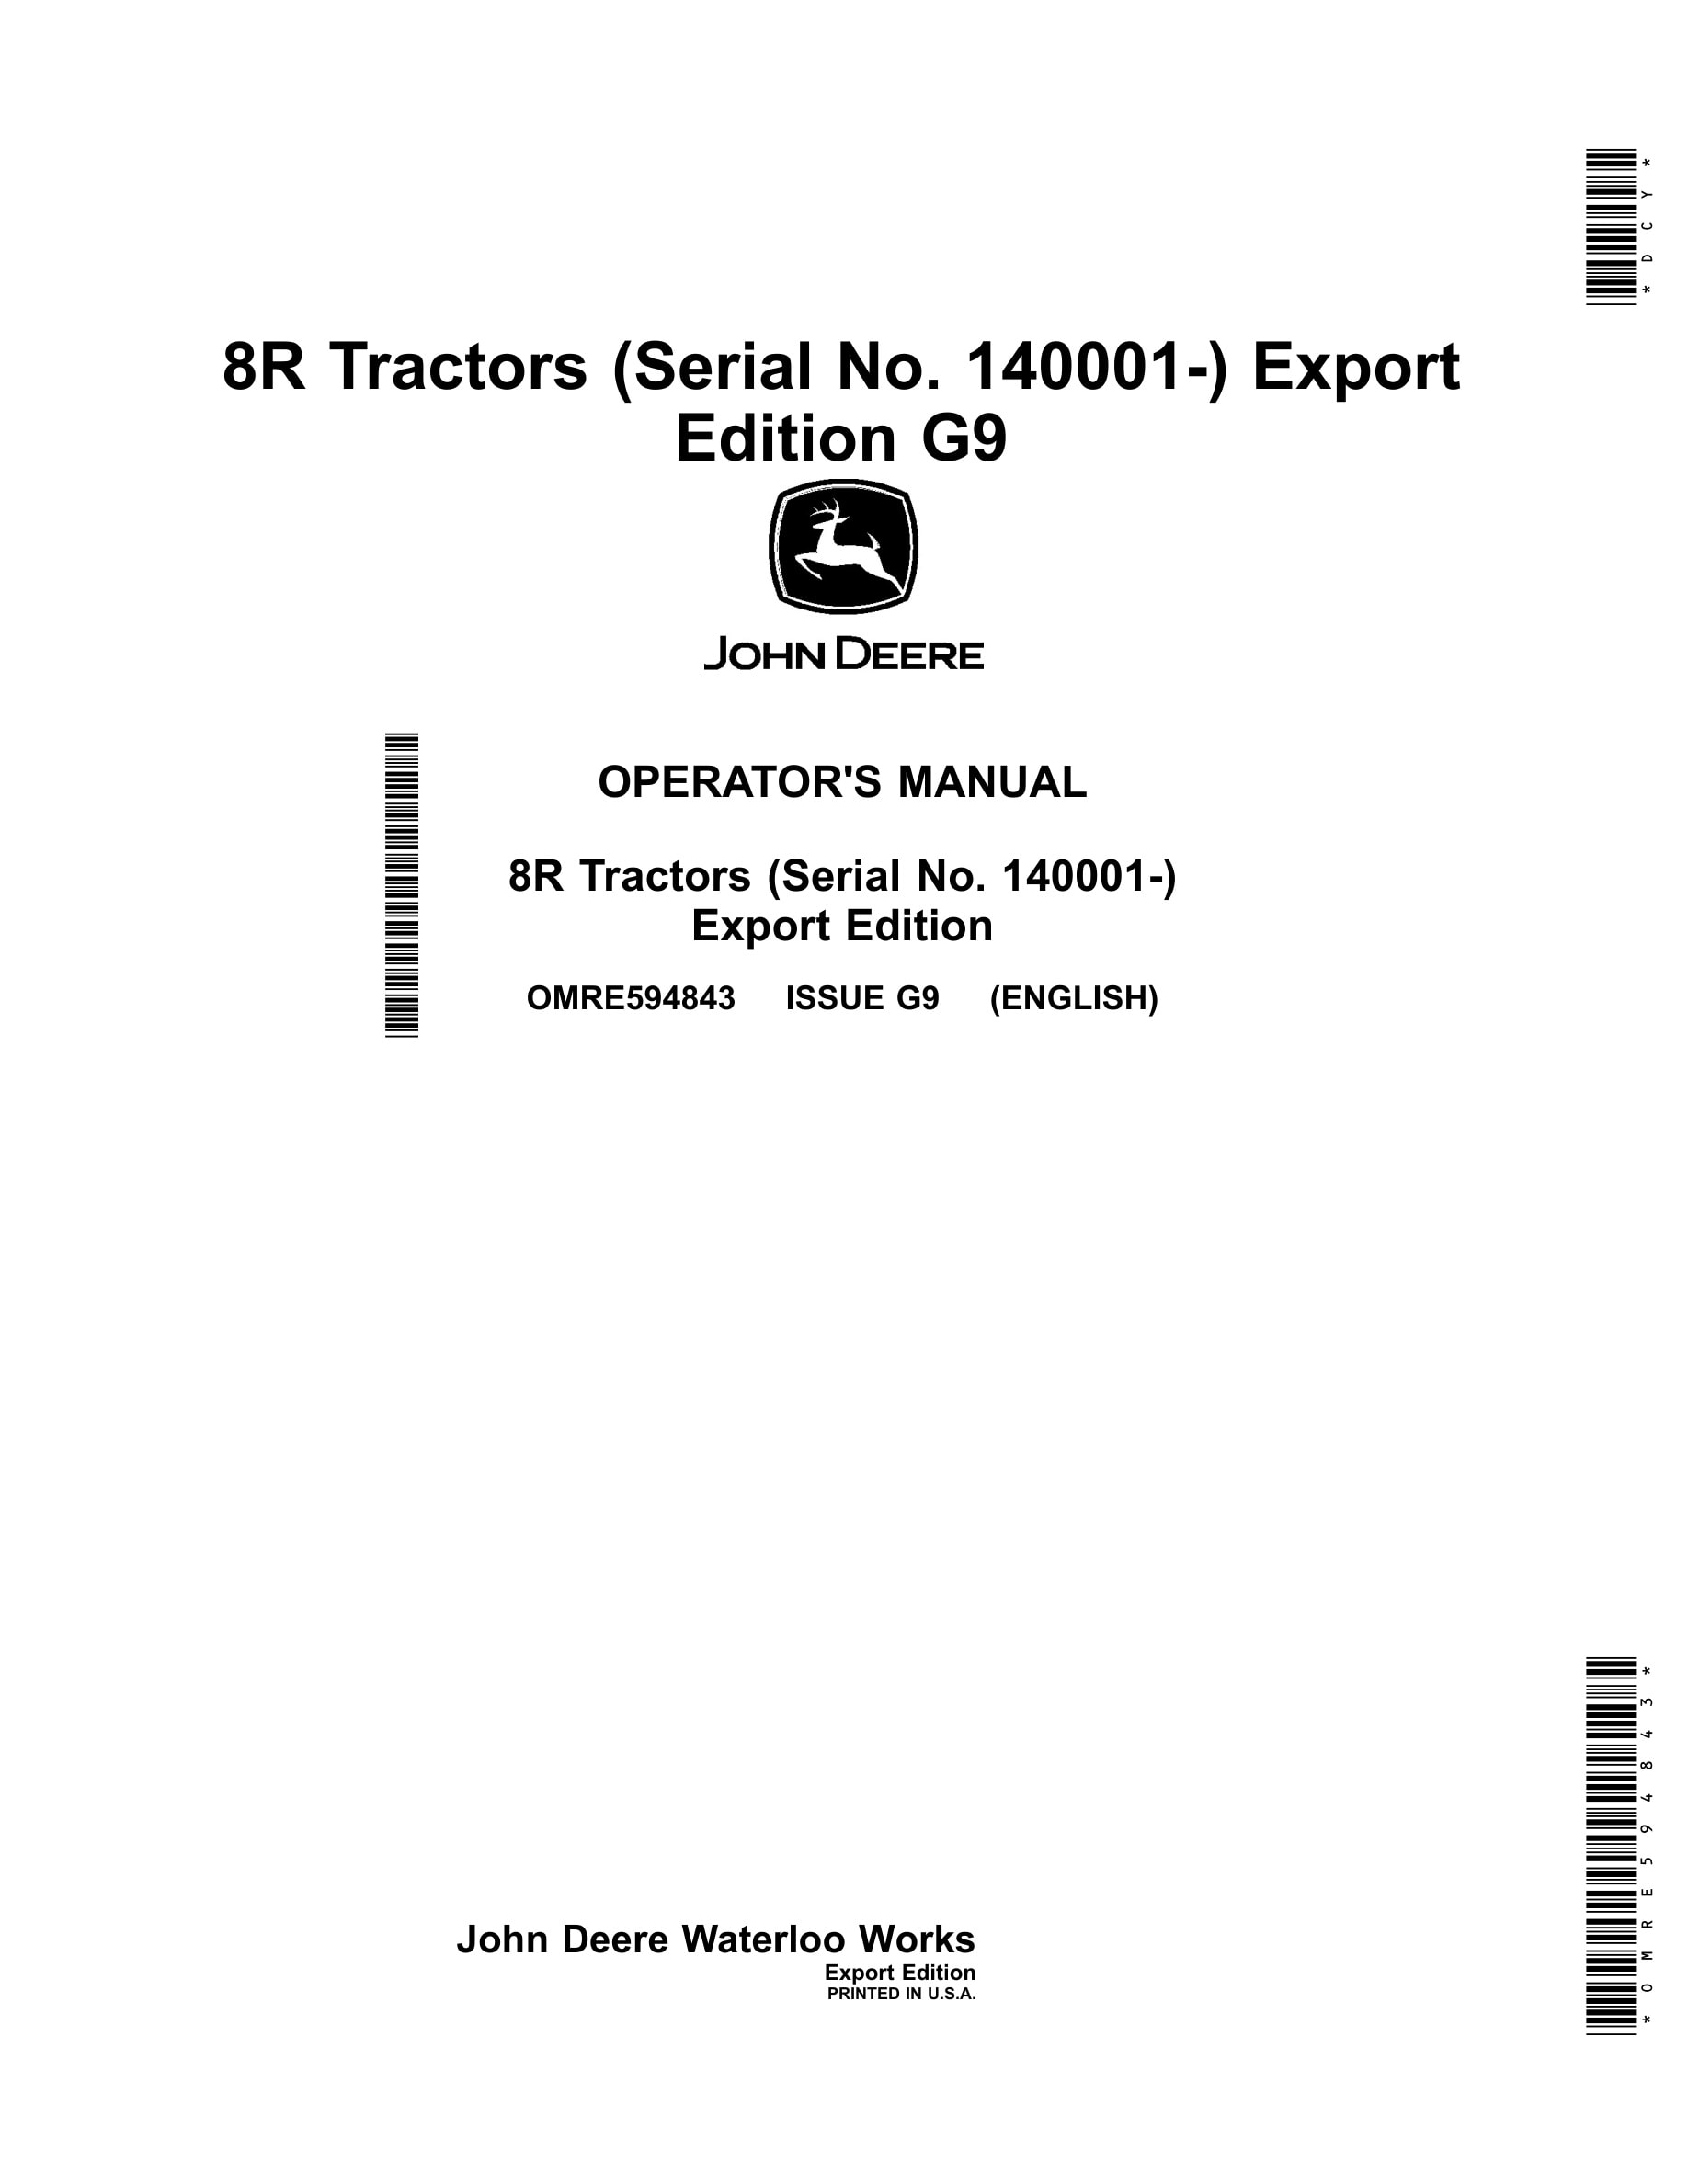 John Deere 8r Tractors Operator Manuals OMRE594843-1